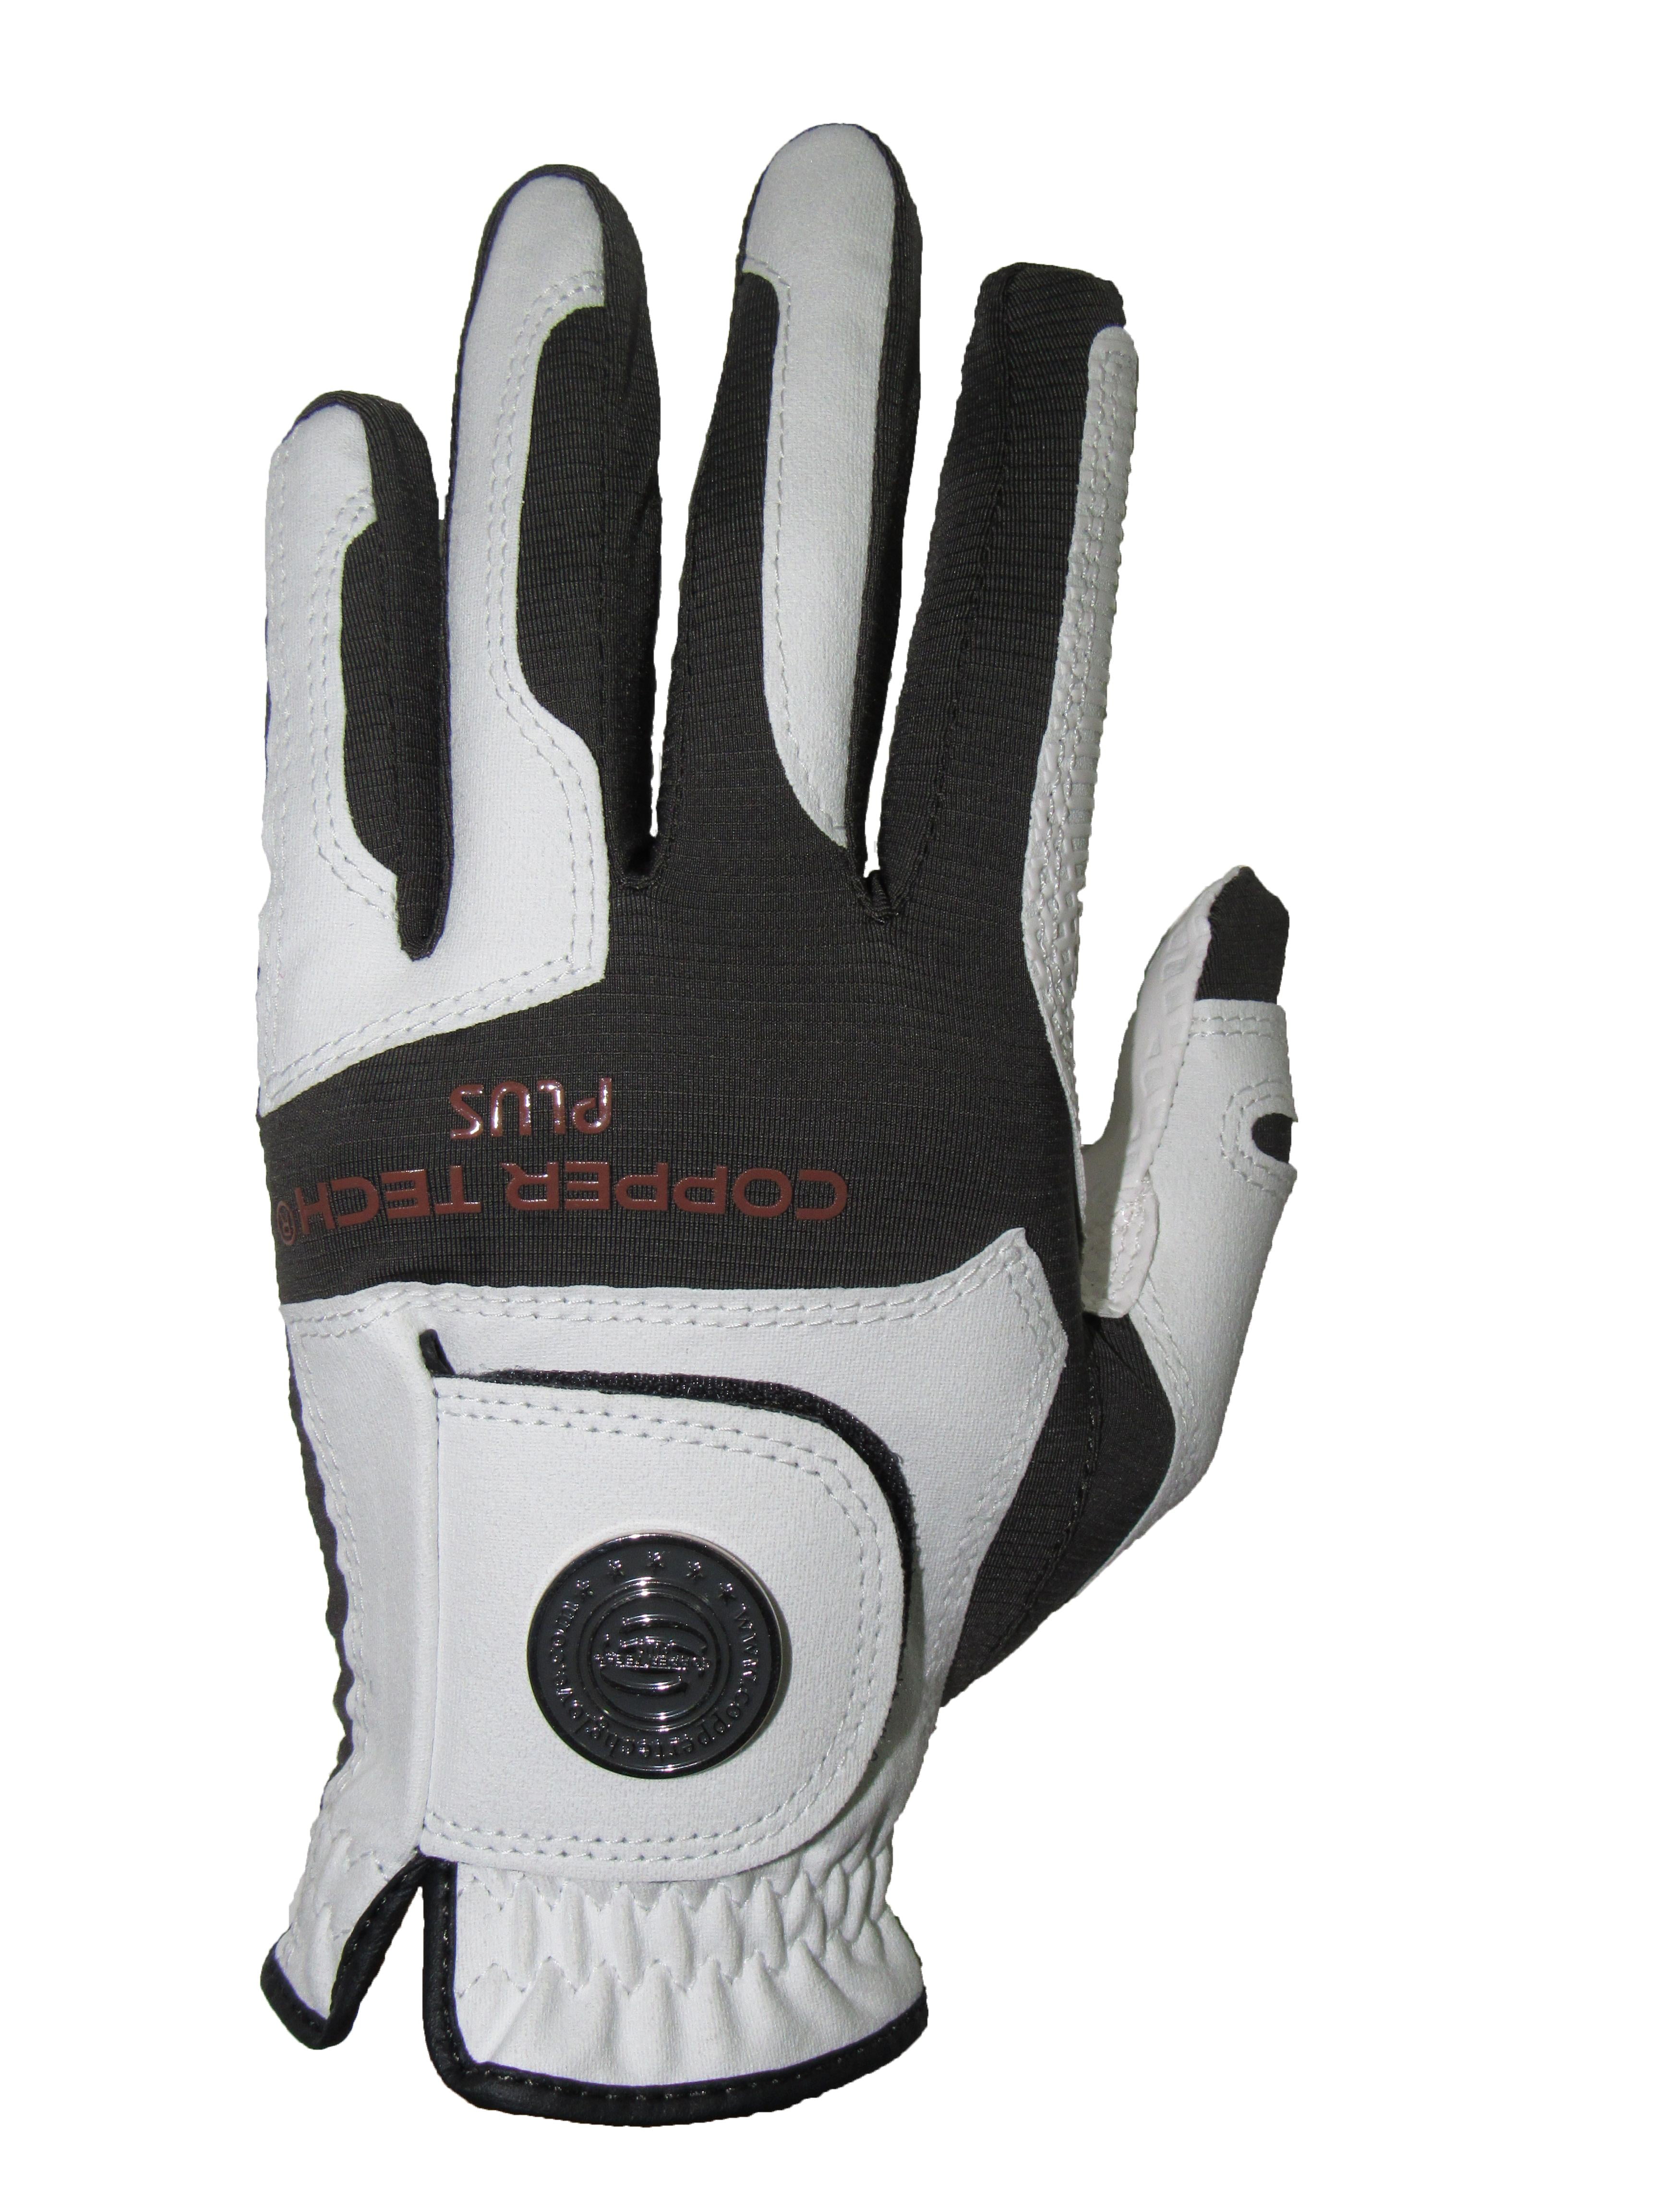 Copper Tech Gloves MMP04BK Copper Tech Master Pro Workman/Mechanics Gloves, Extra Large, Black